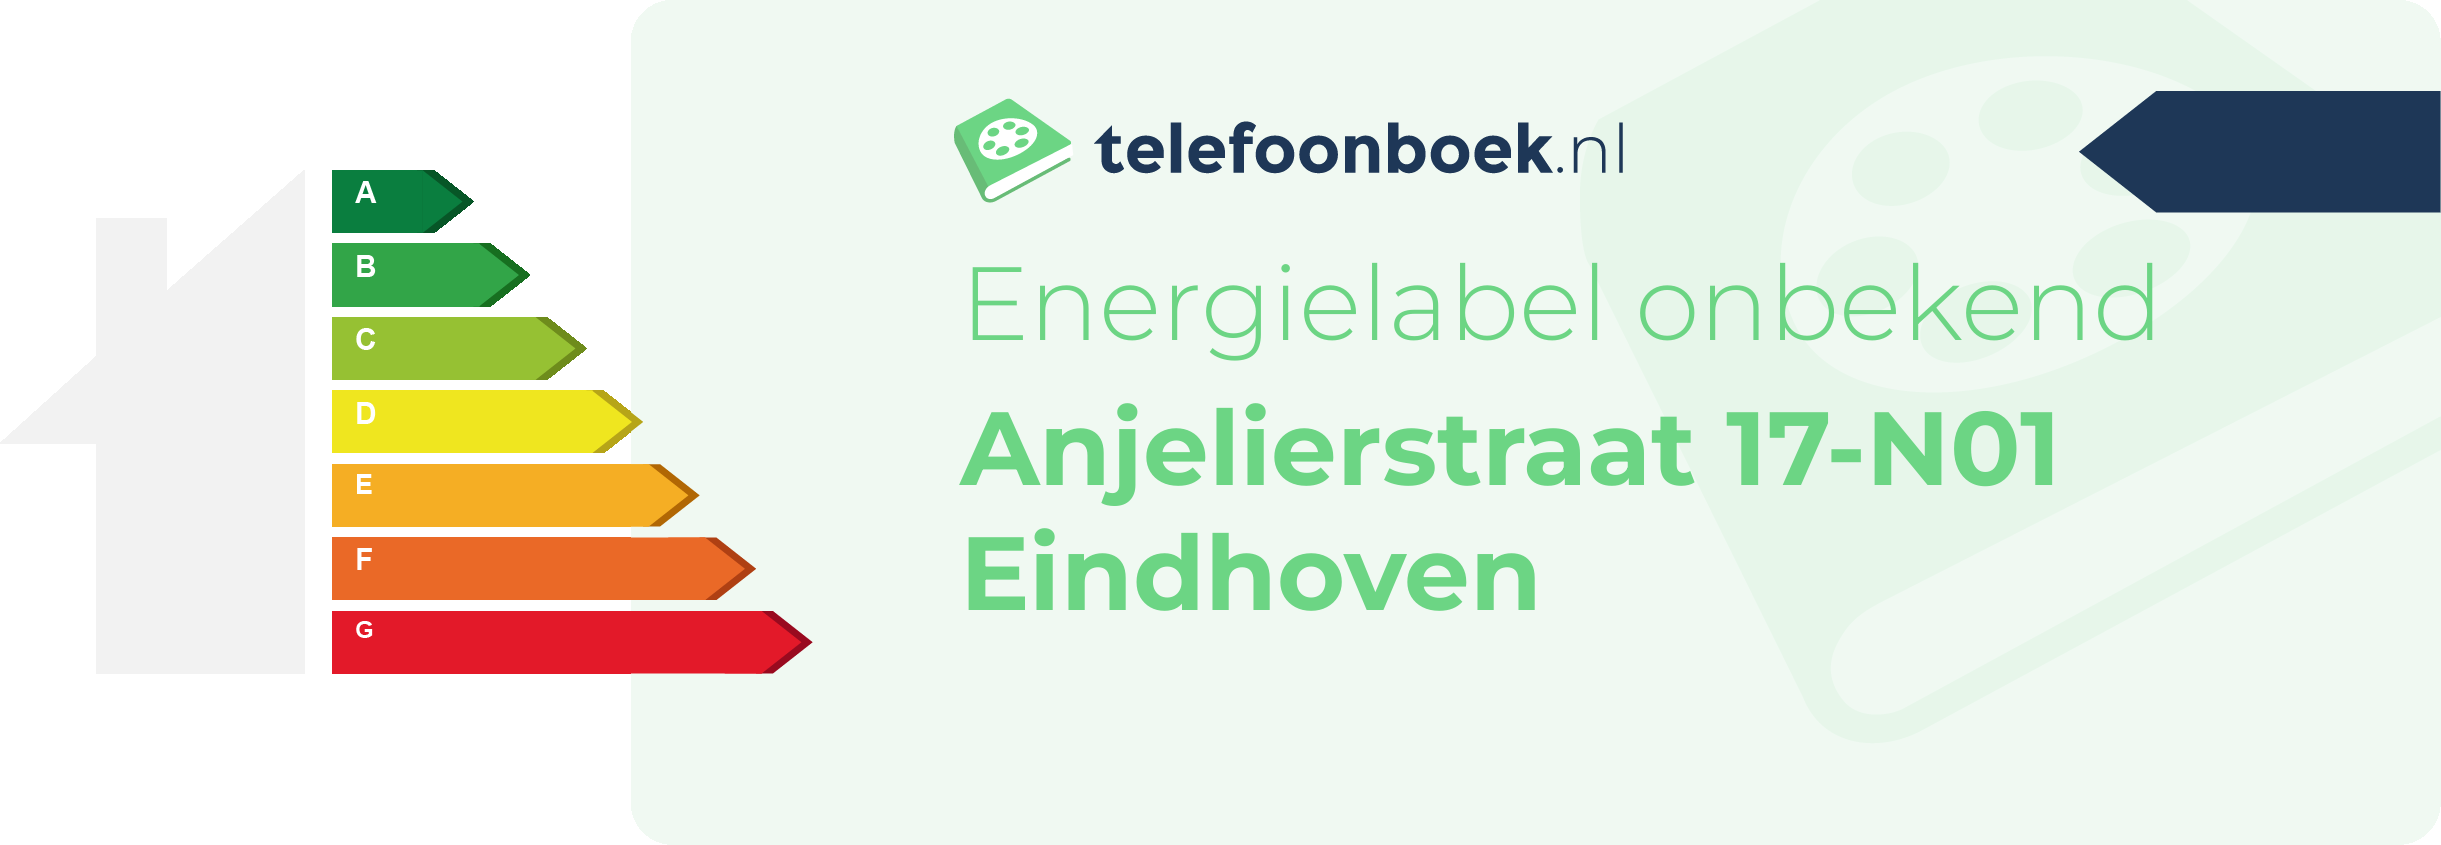 Energielabel Anjelierstraat 17-N01 Eindhoven